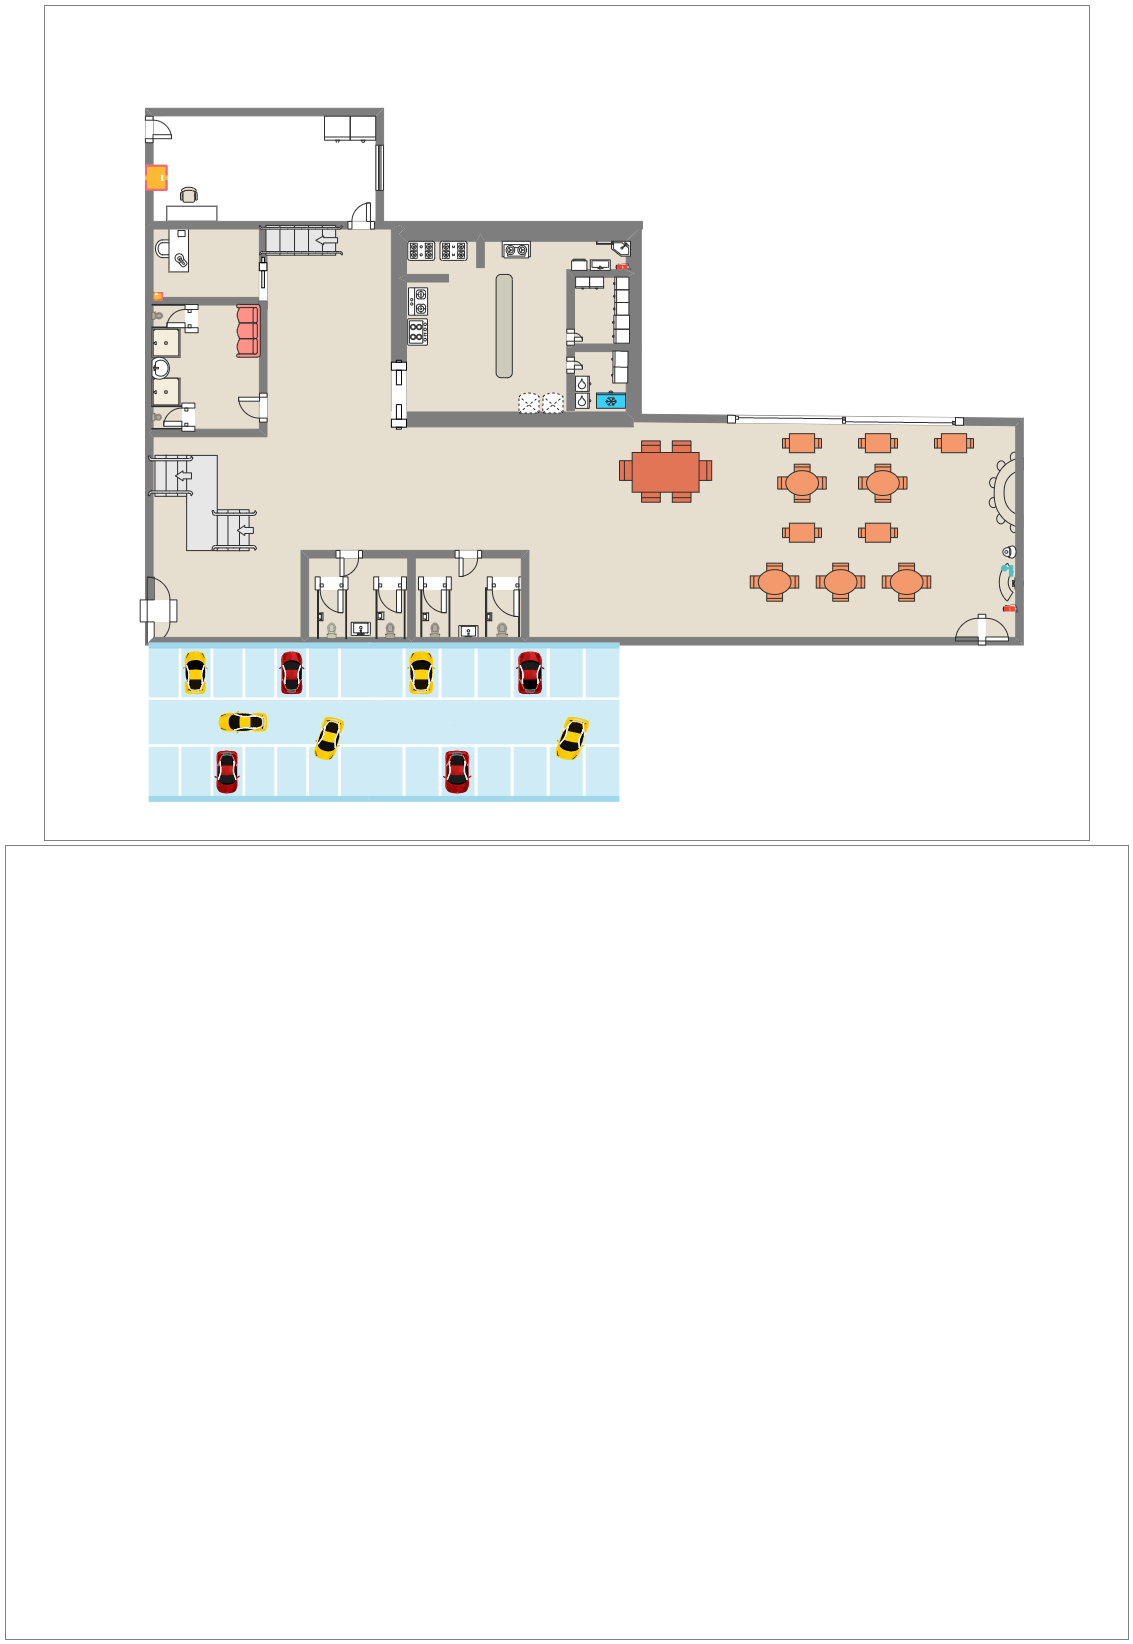 Restaurant Floorplan Template Sample